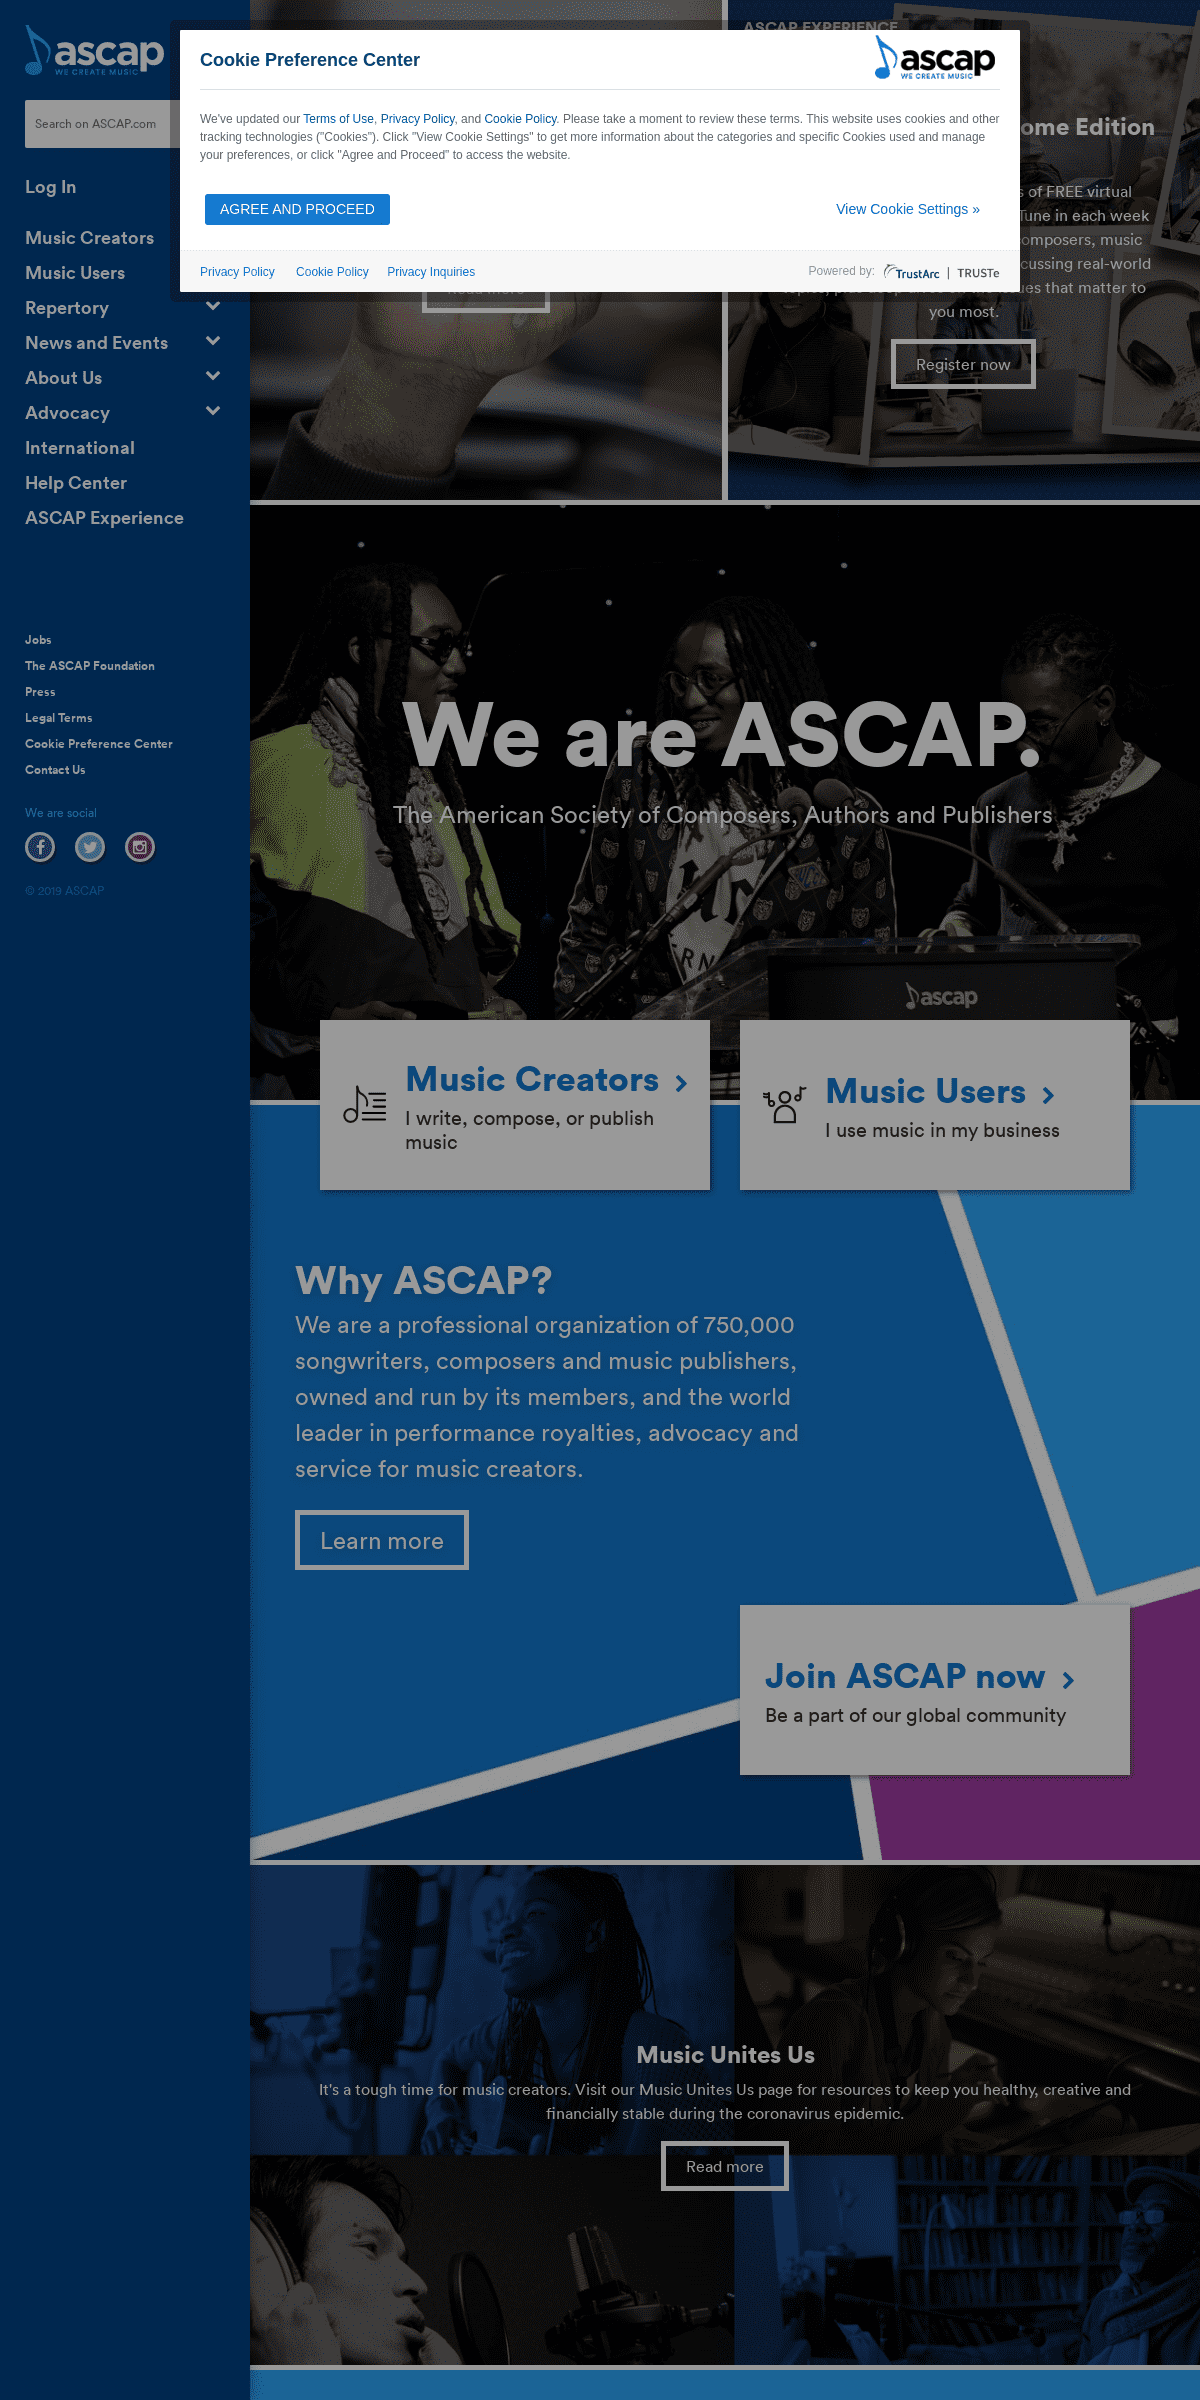 A complete backup of ascap.com